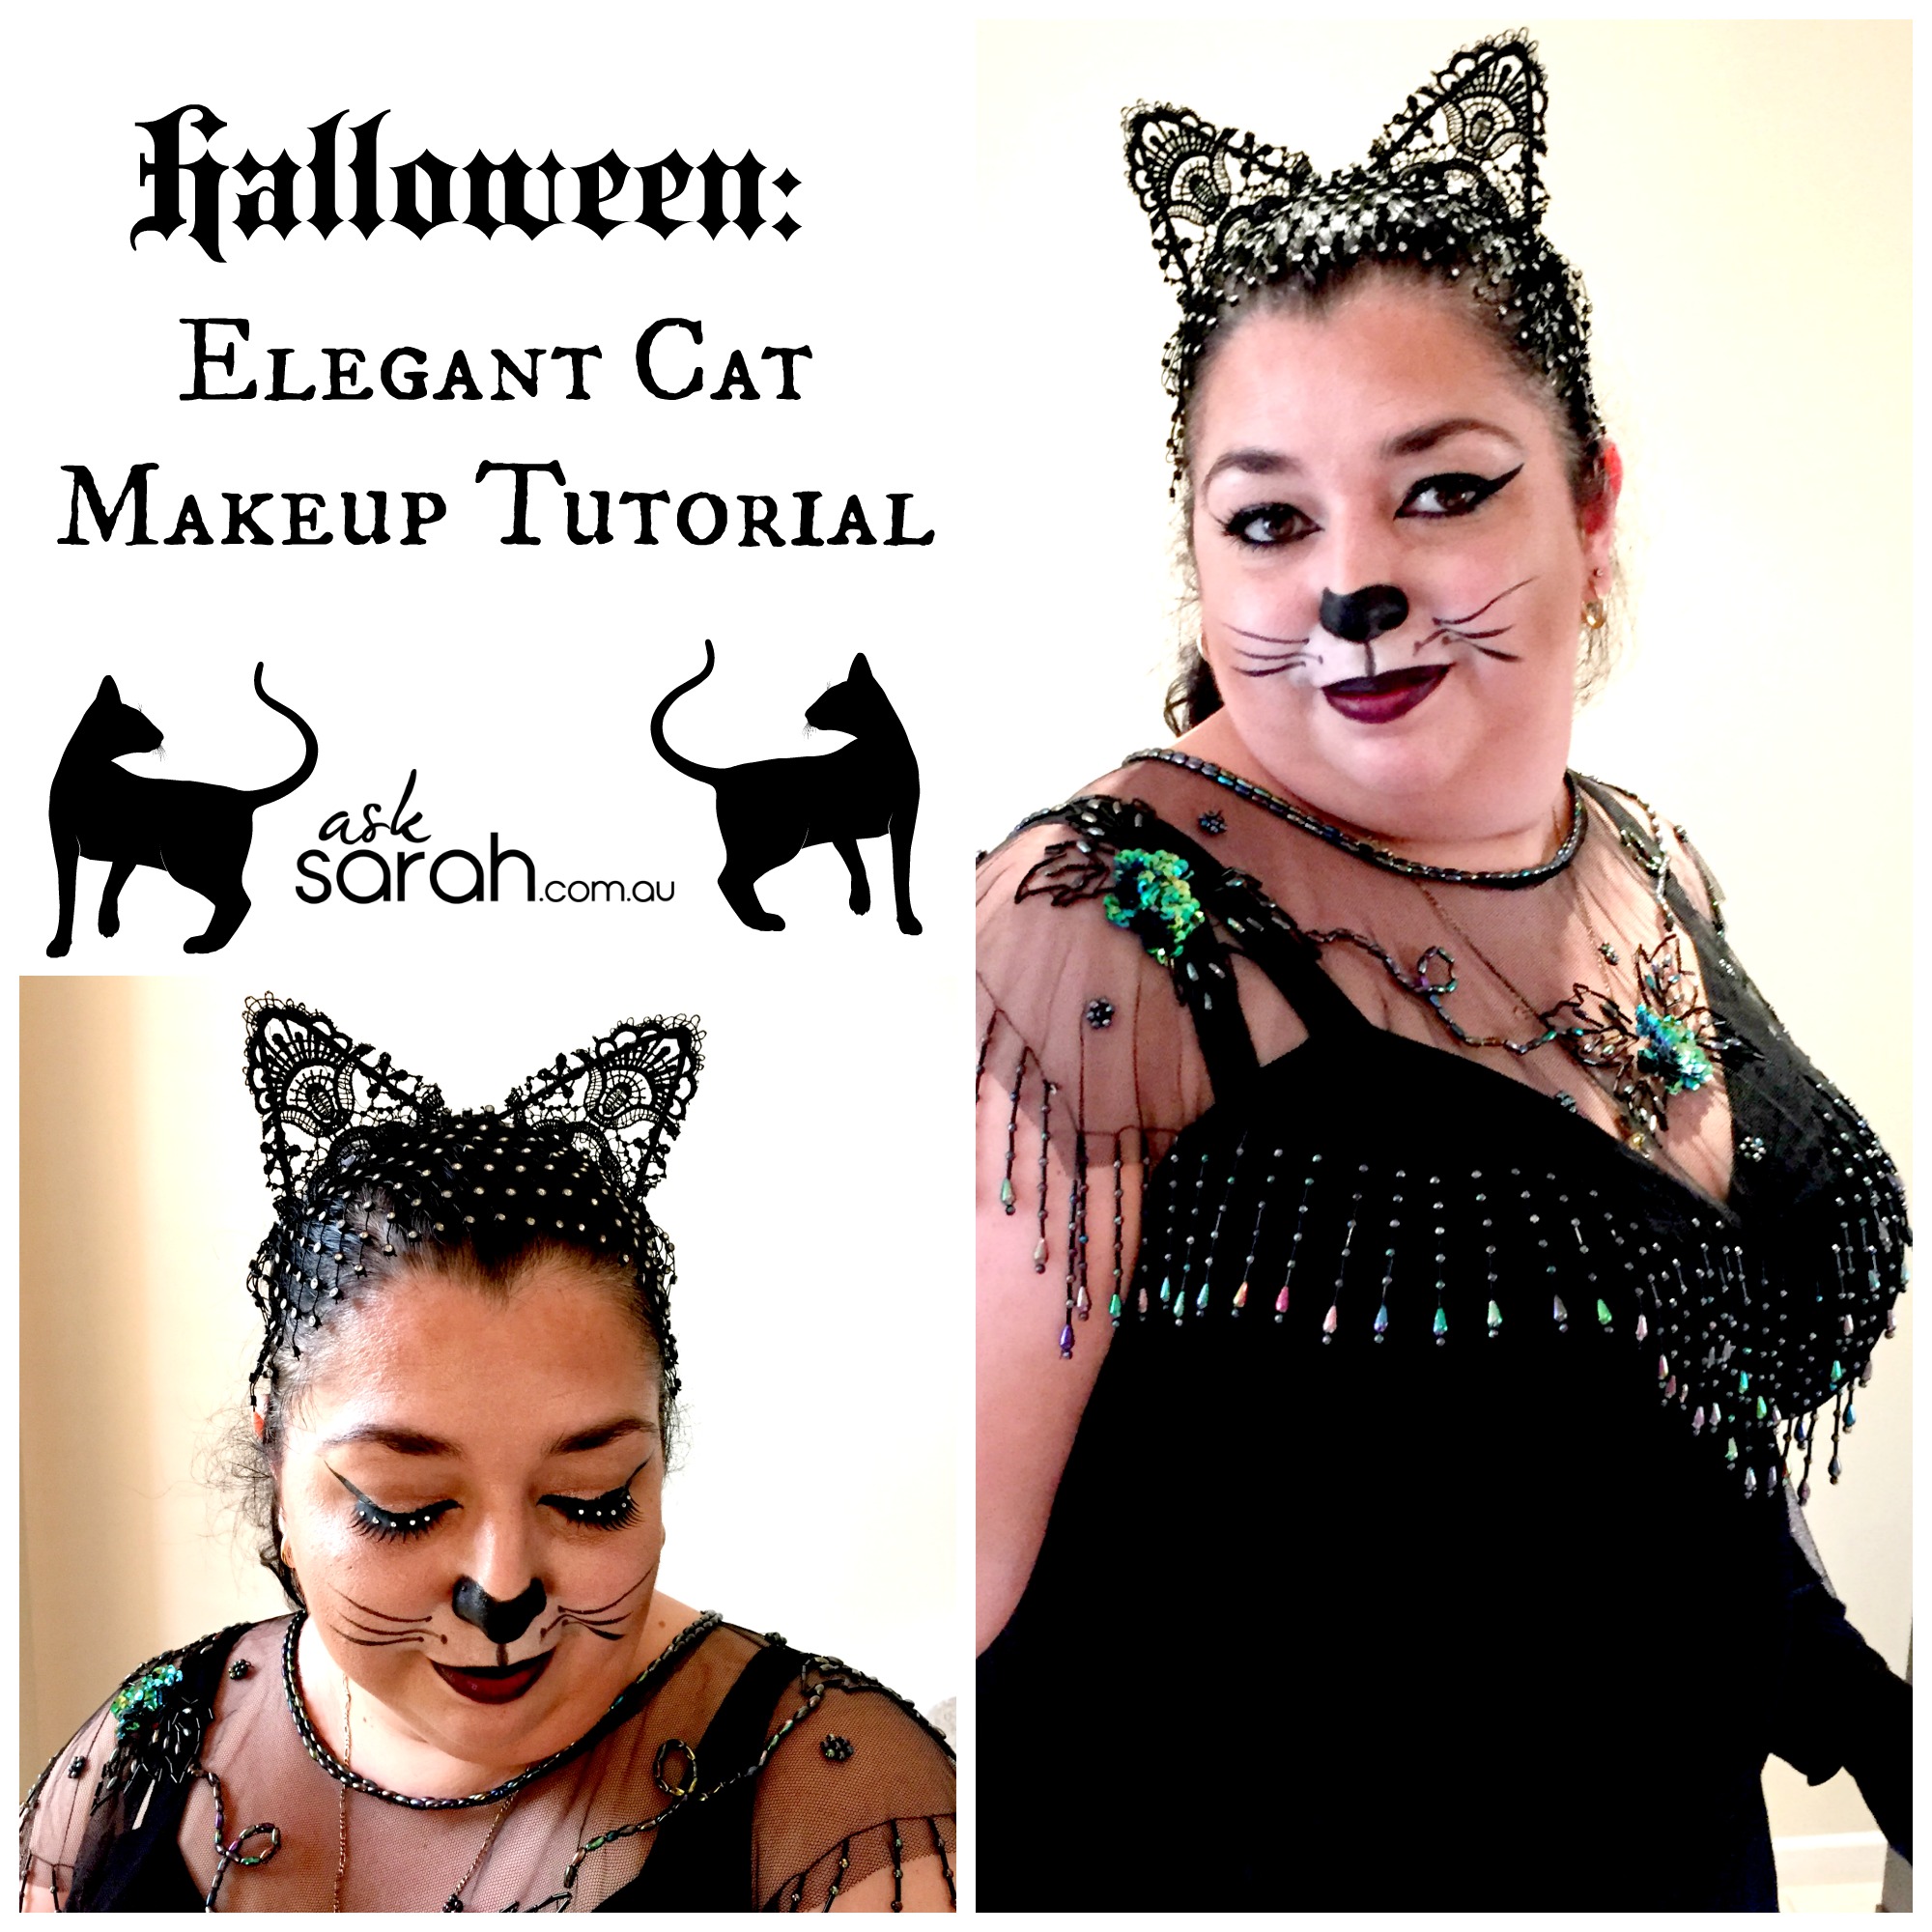 Halloween: Elegant Cat Makeup Tutorial & Costume {No Fancy Facepaint or Special Skills Required!}